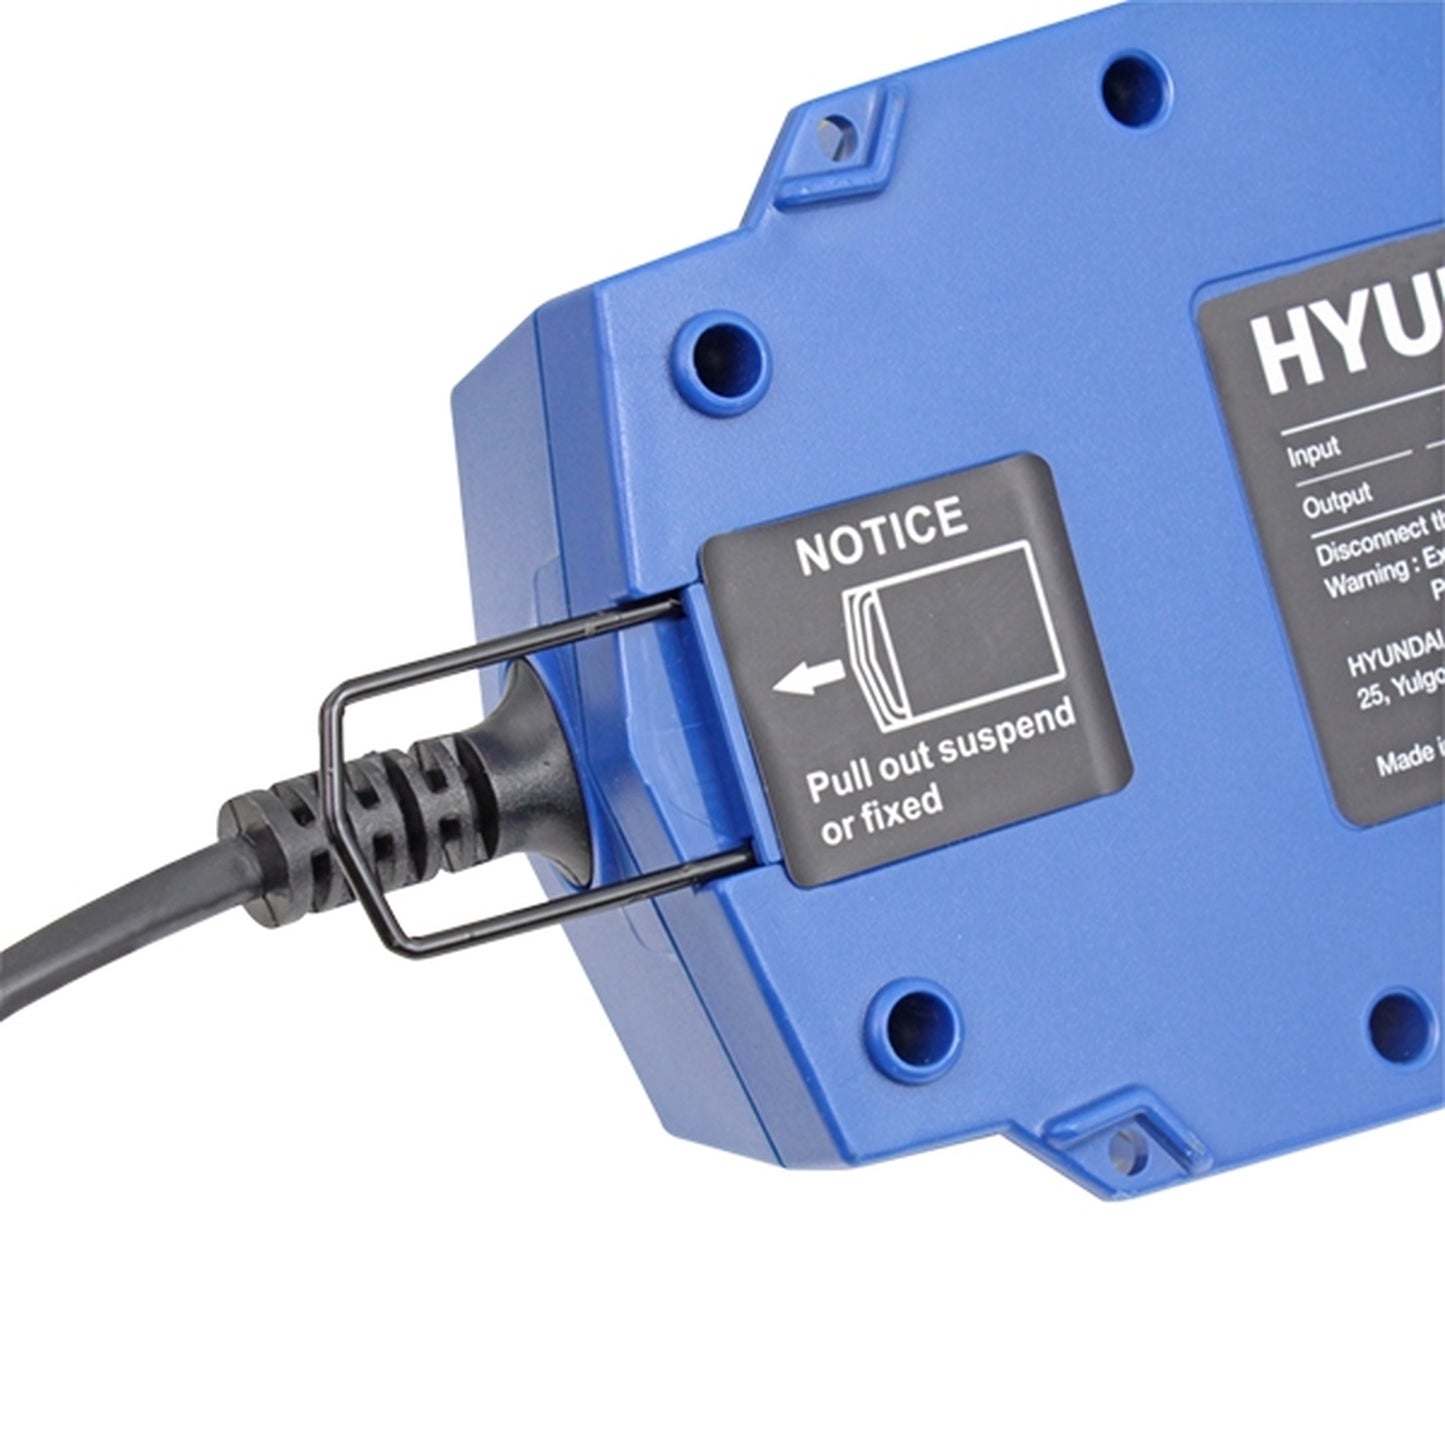 Hyundai HYSC7000 SMART 24v & 12v Battery Charger